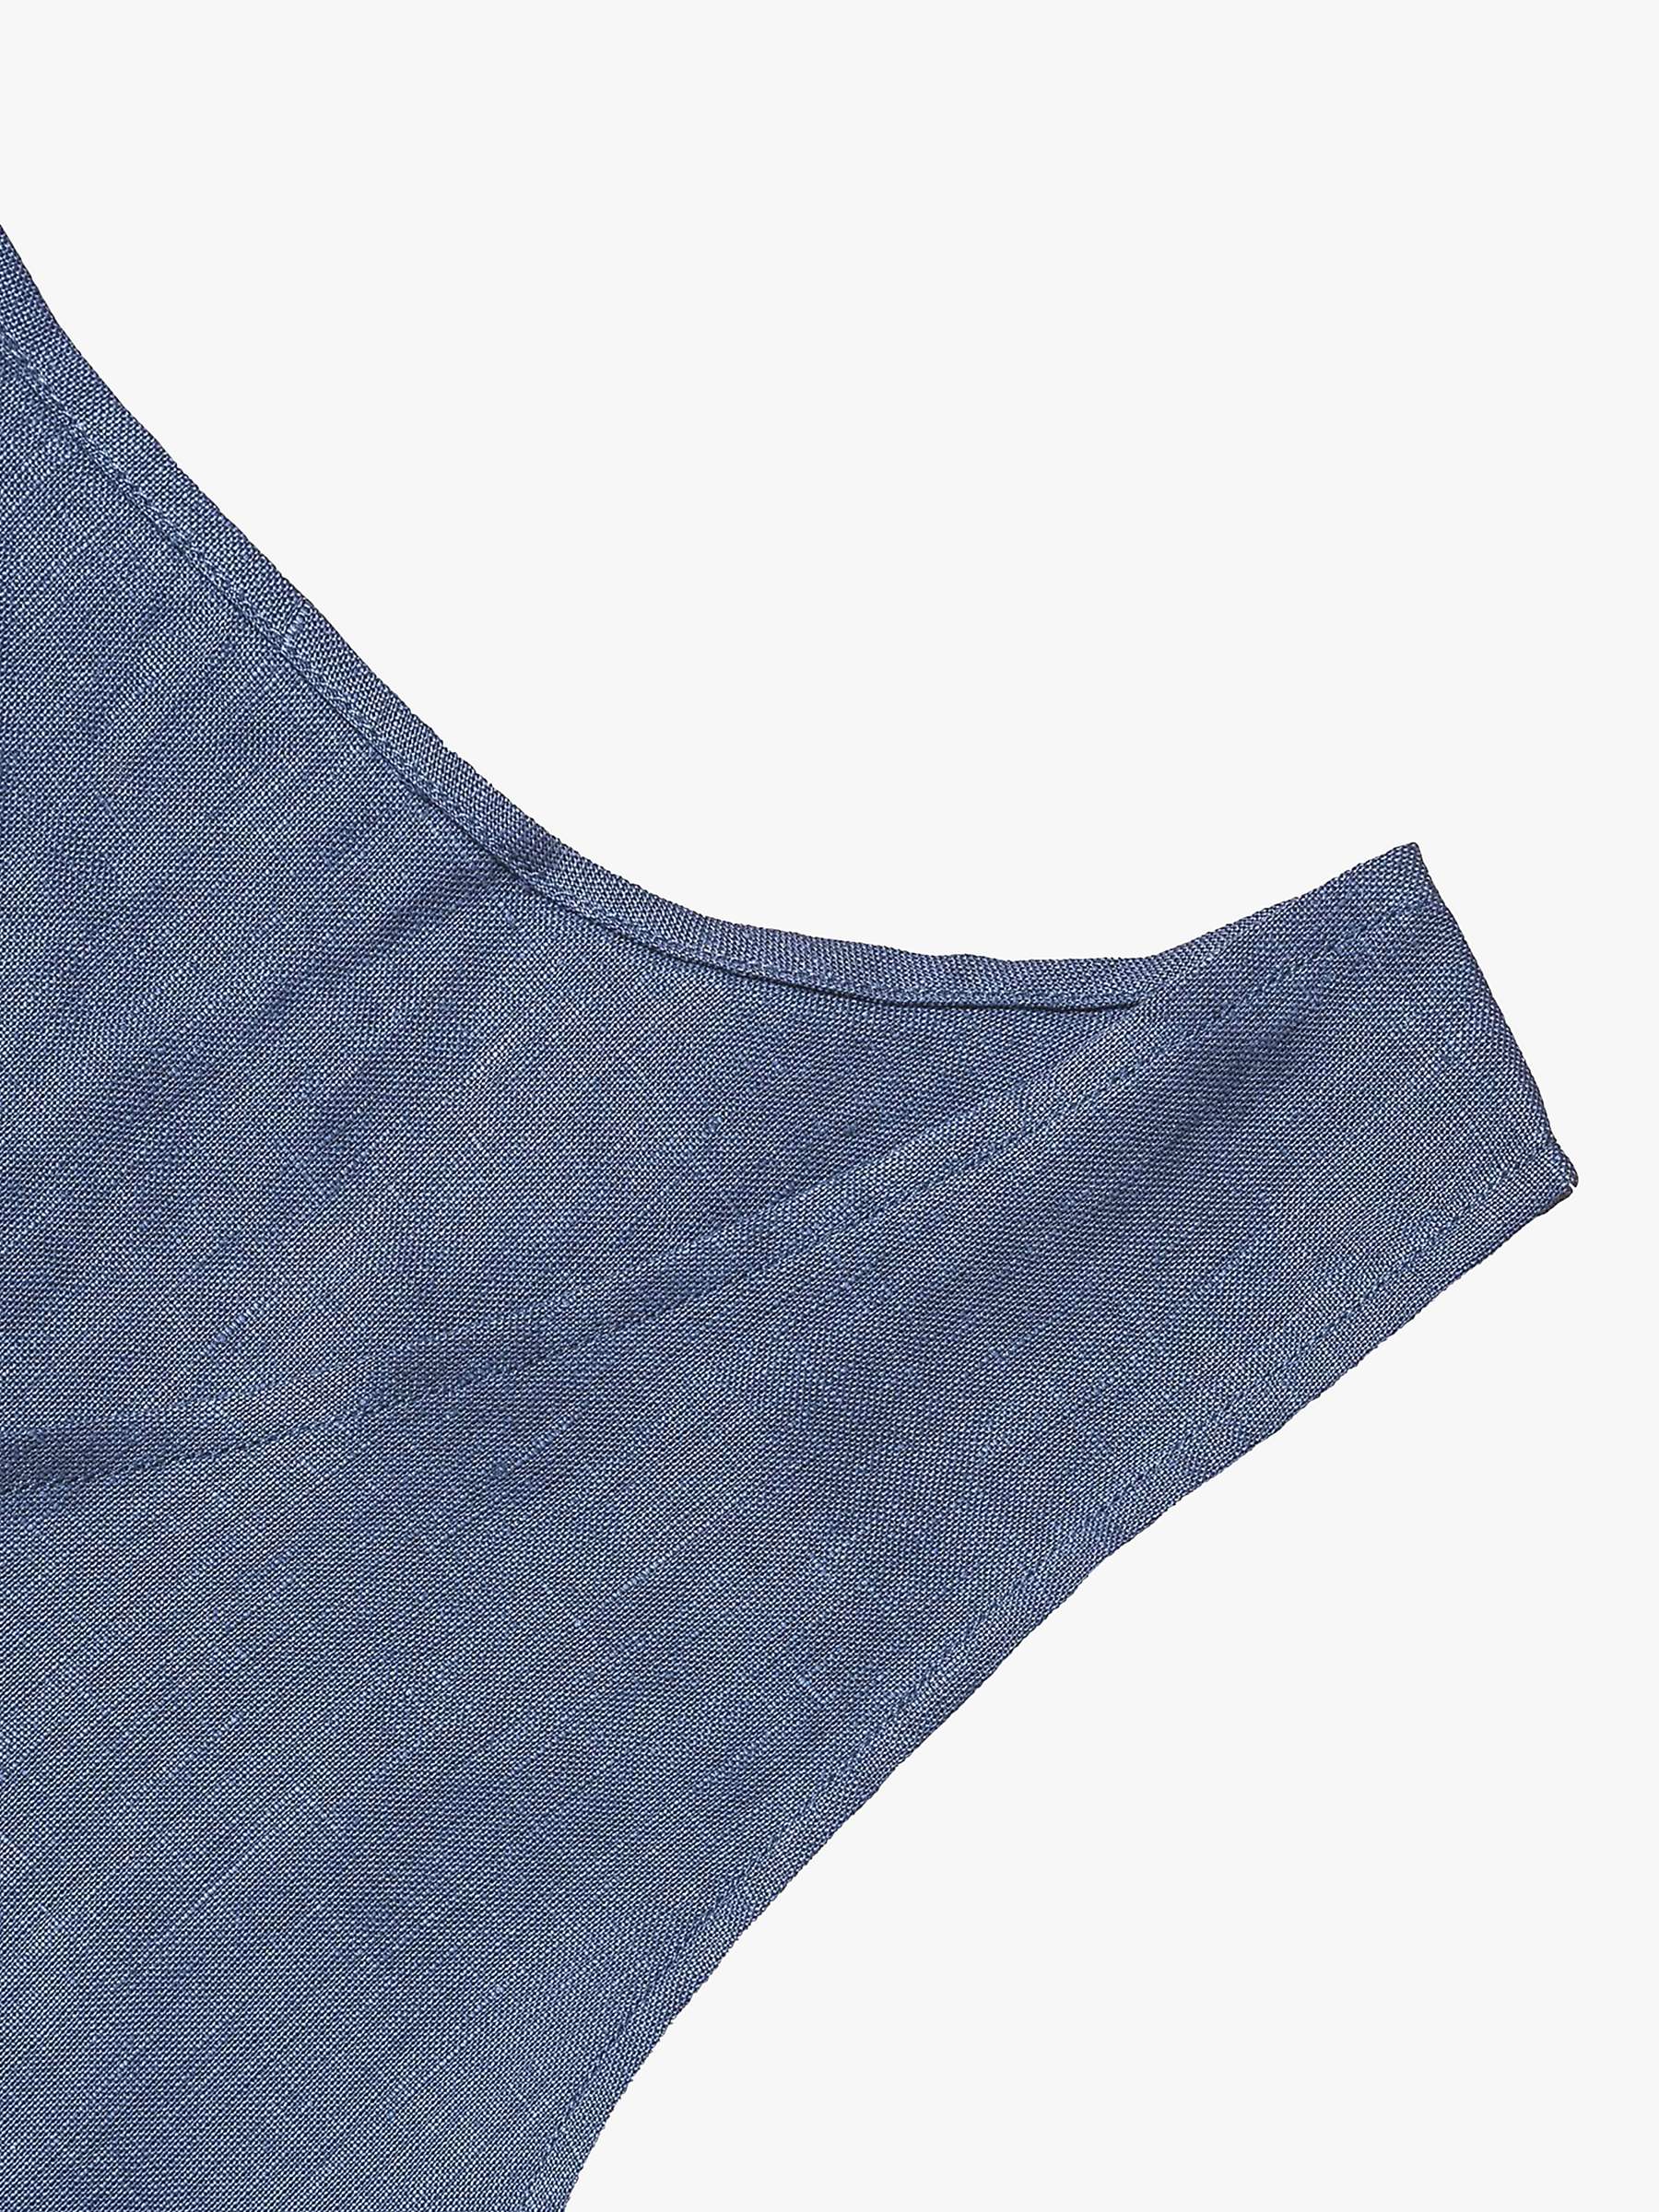 Buy Piglet in Bed Linen Cami & Shorts Pyjama Set Online at johnlewis.com